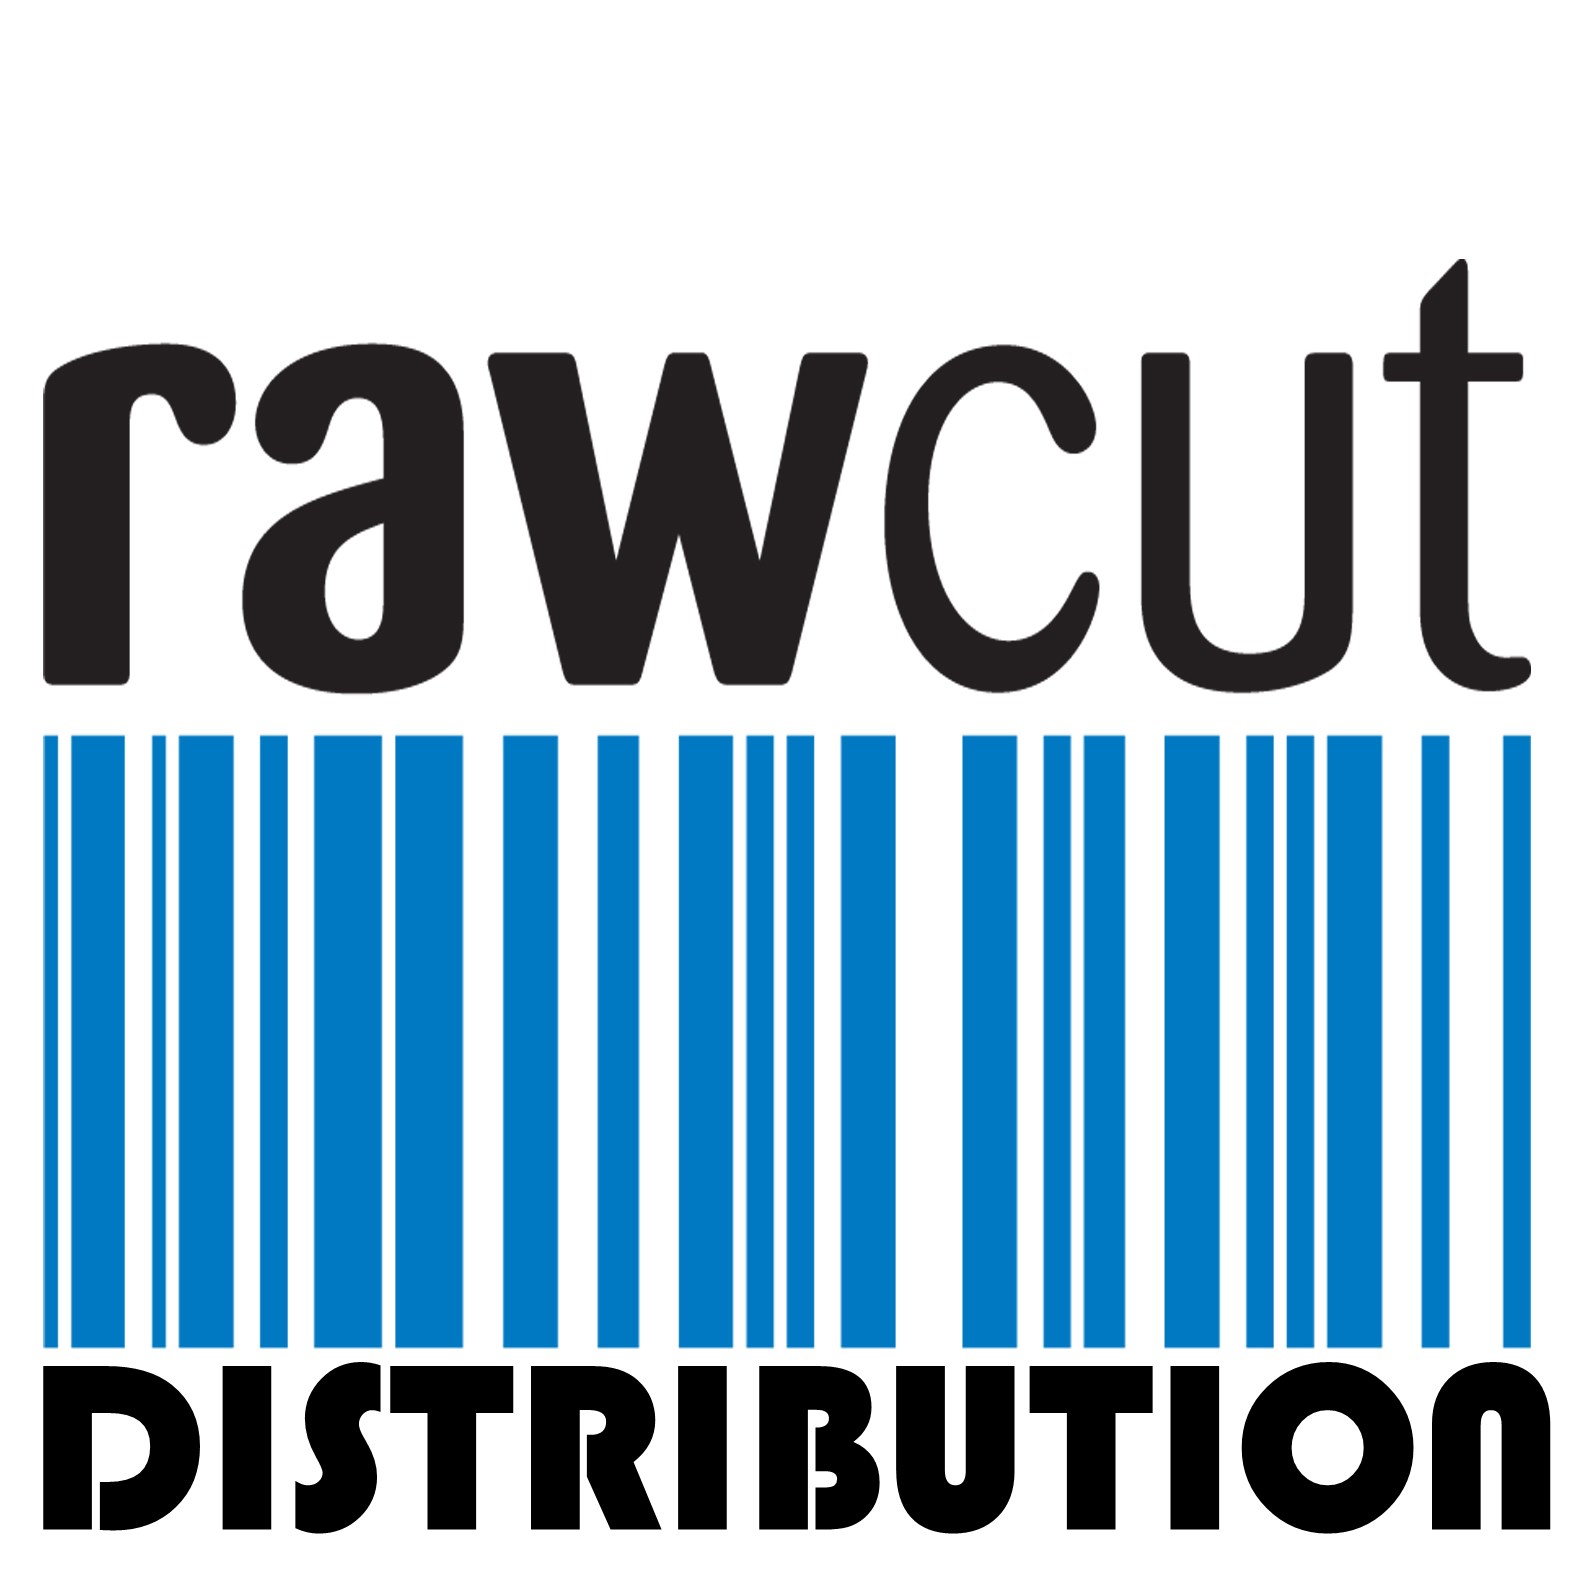 Raw Cut Distribution